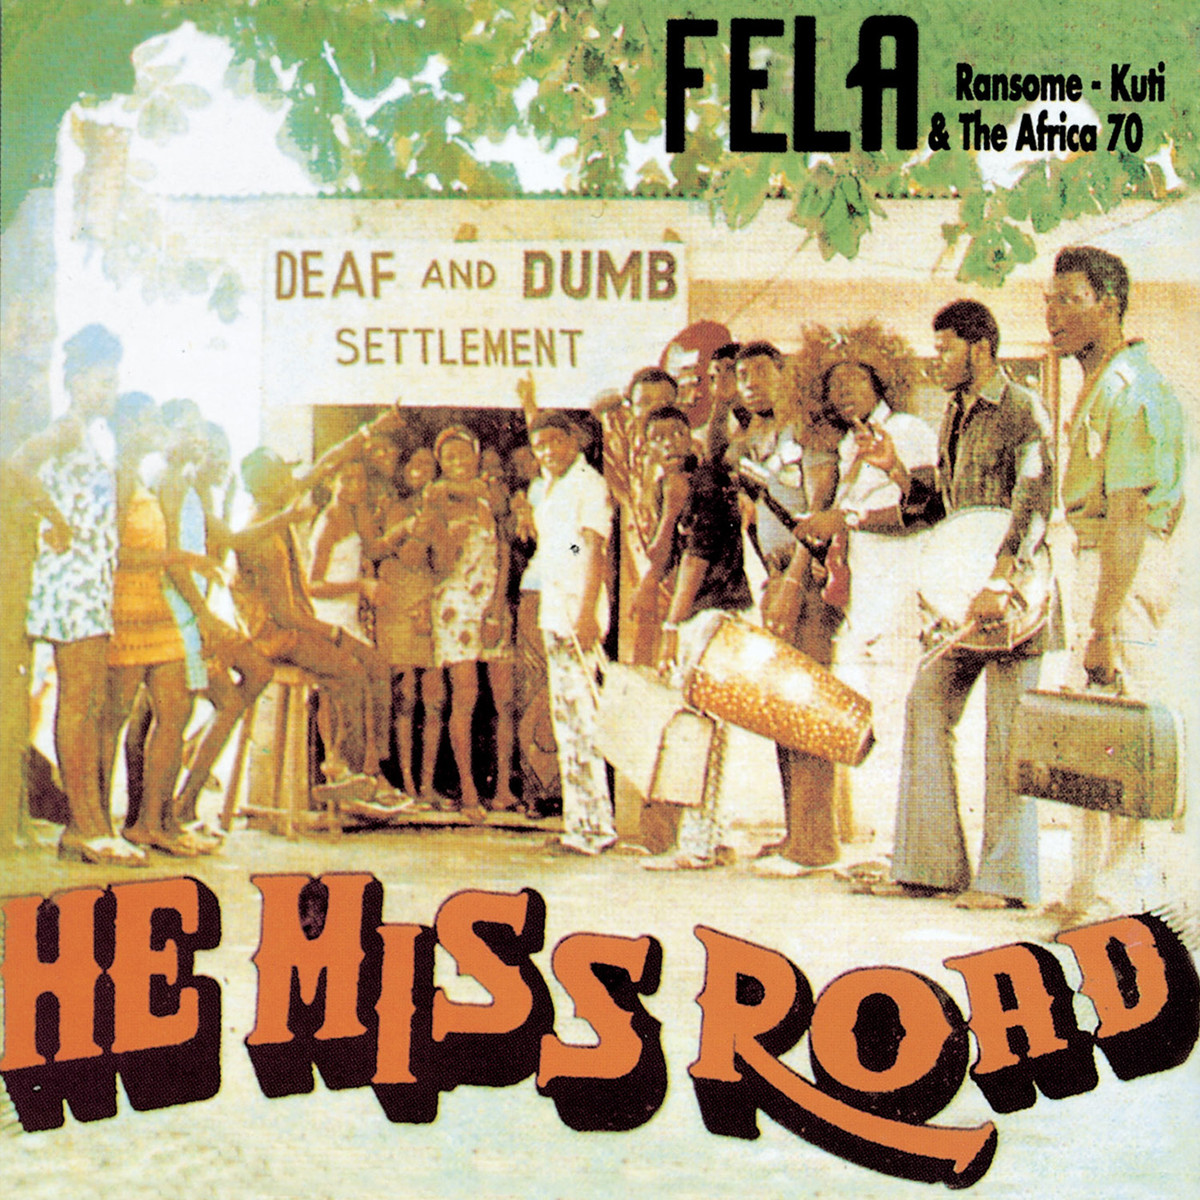 The missing road. Fela Kuti. Fela Kuti he Miss Road album Cover. Fela Kuti - expensive shit (1975). Fela Kuti and Africa 70 — expensive shit.